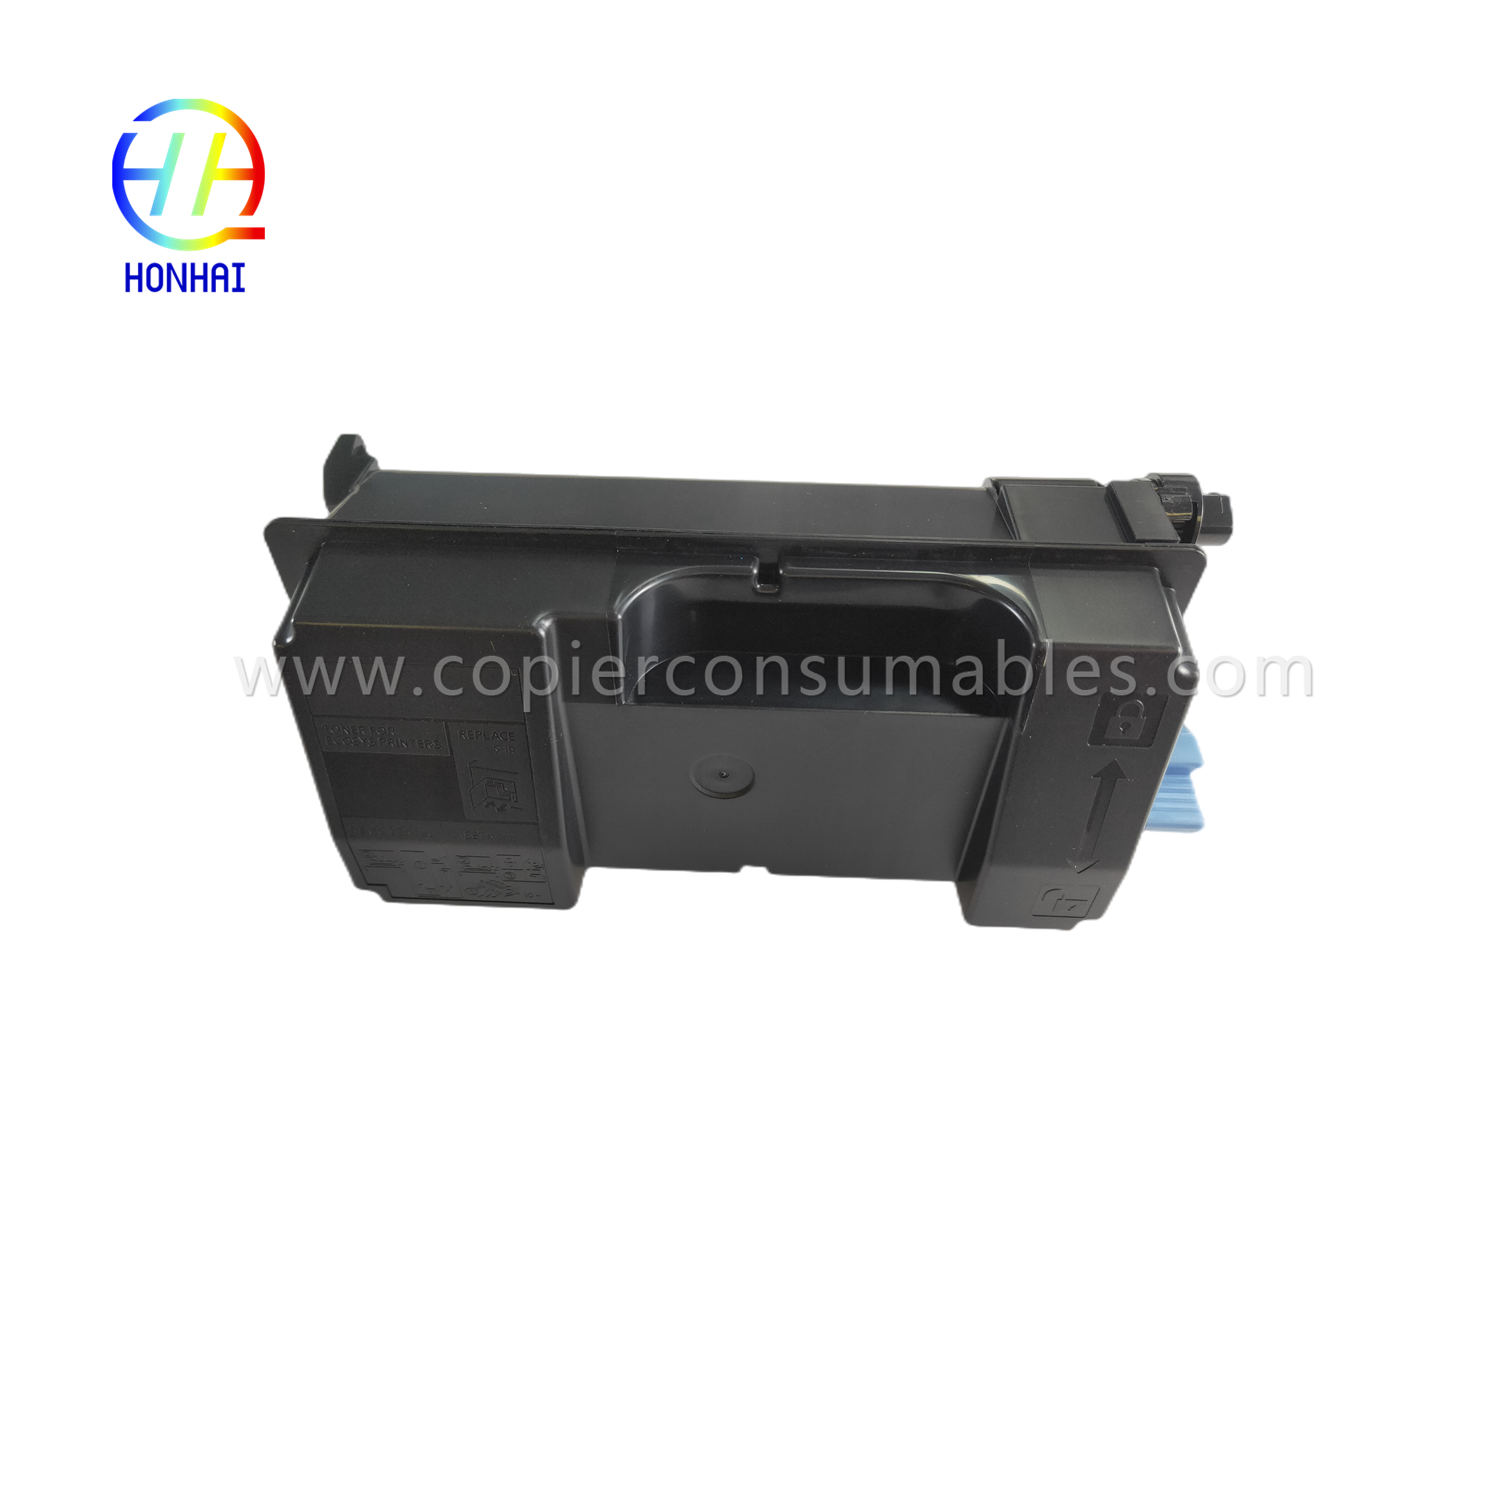 https://www.copierconsumables.com/toner-cartridge-for-ricoh-mp501-mp601-sp-5300-sp-5310-product/